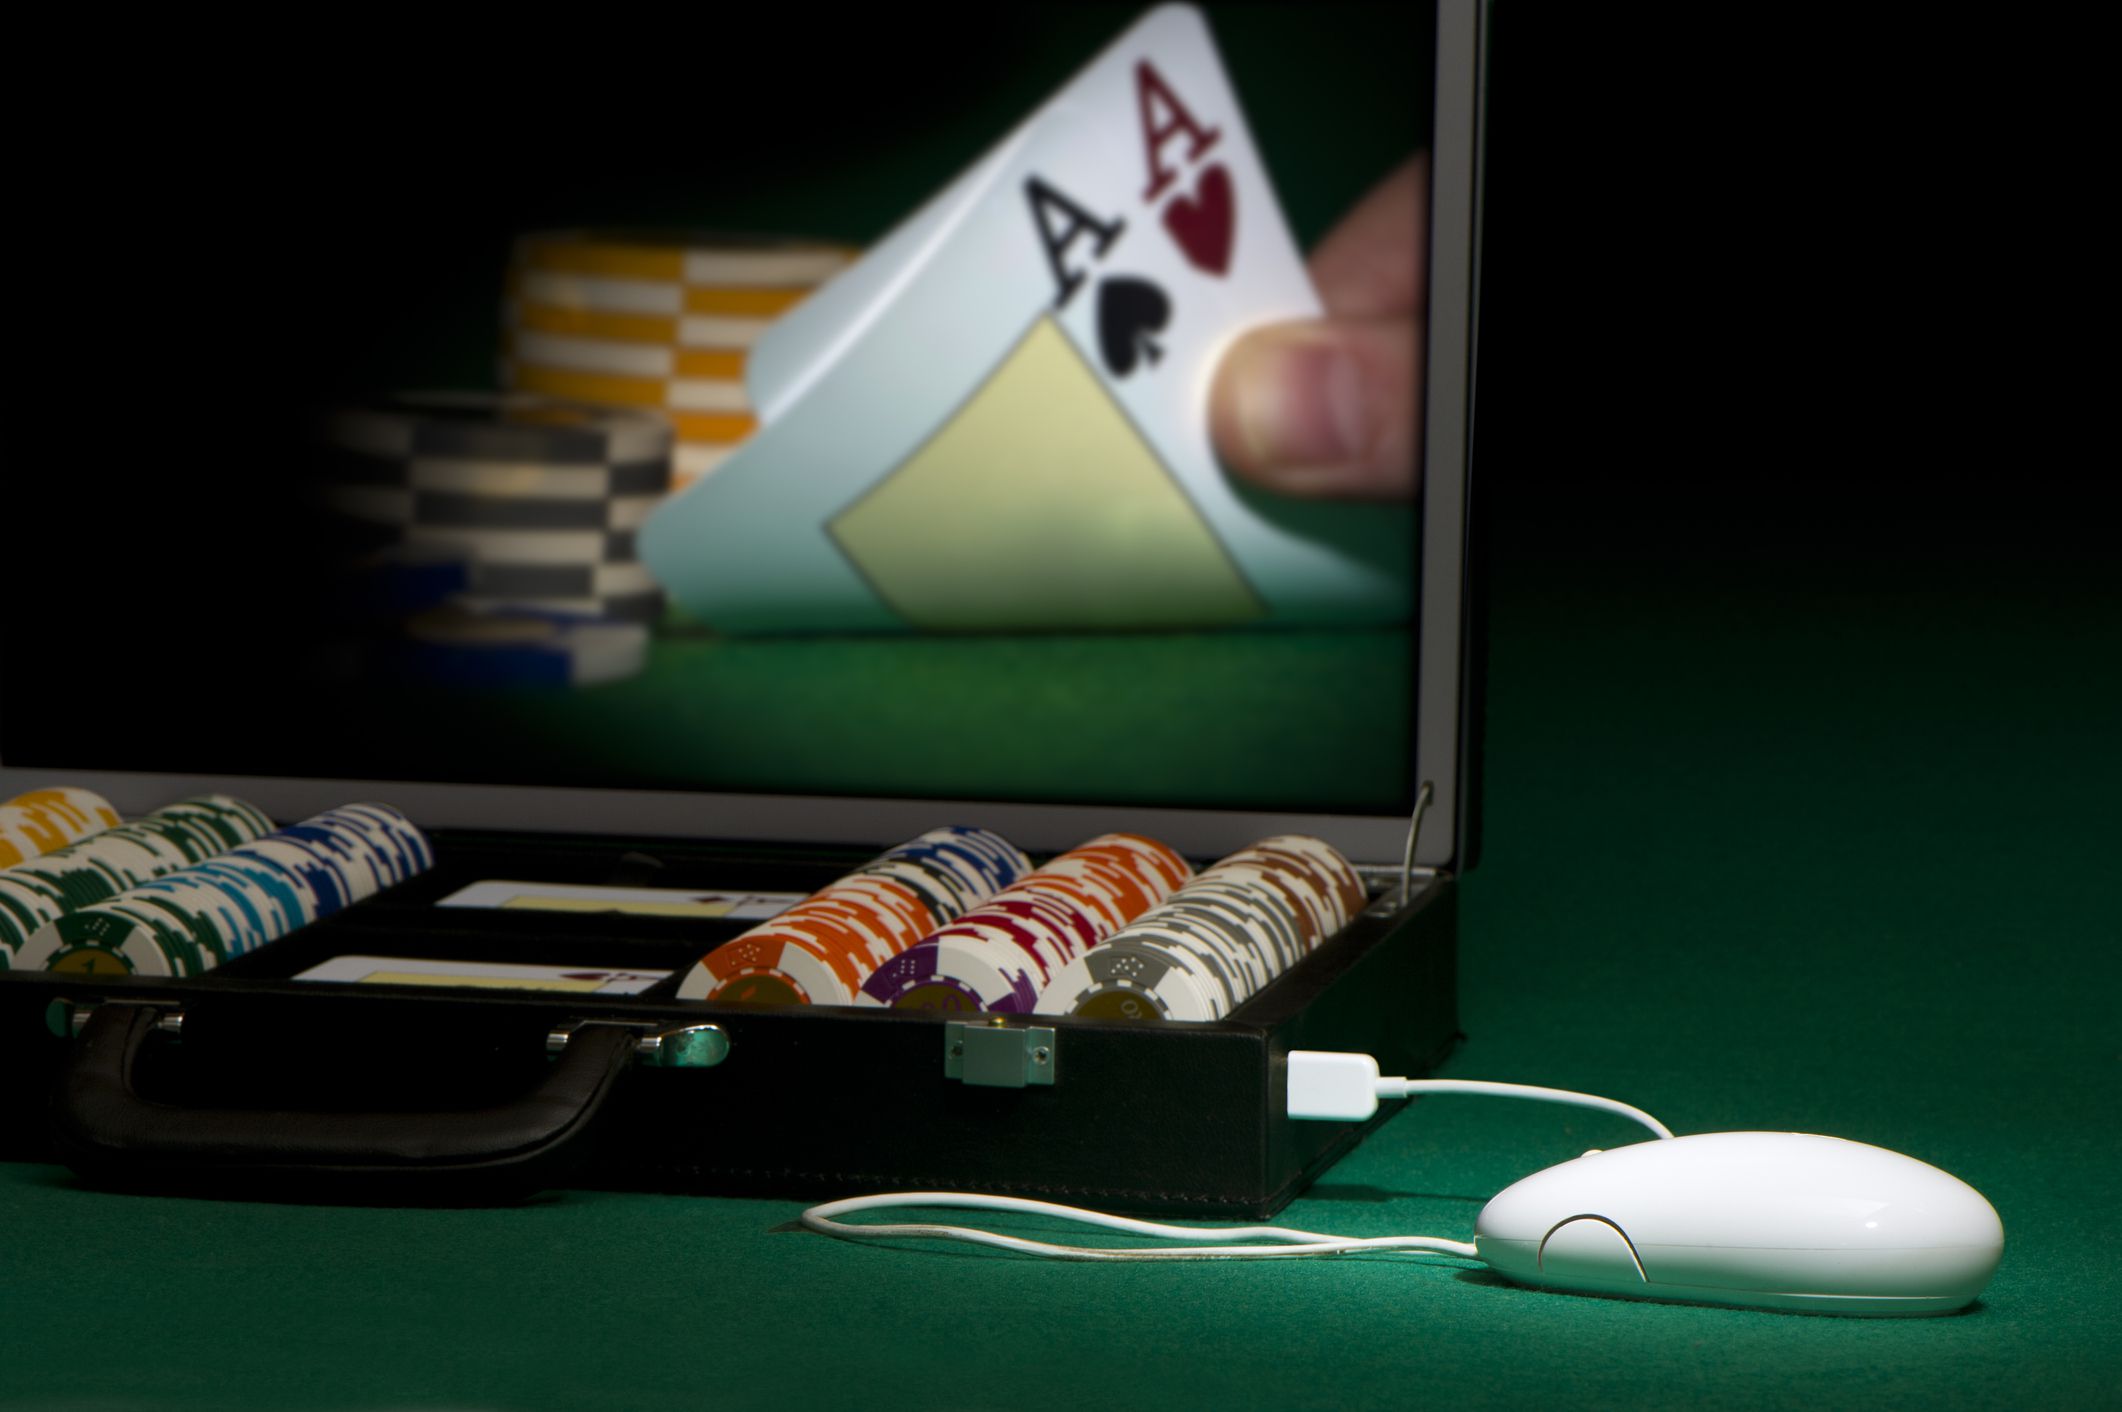 Top 10 ways to win big at online casinos